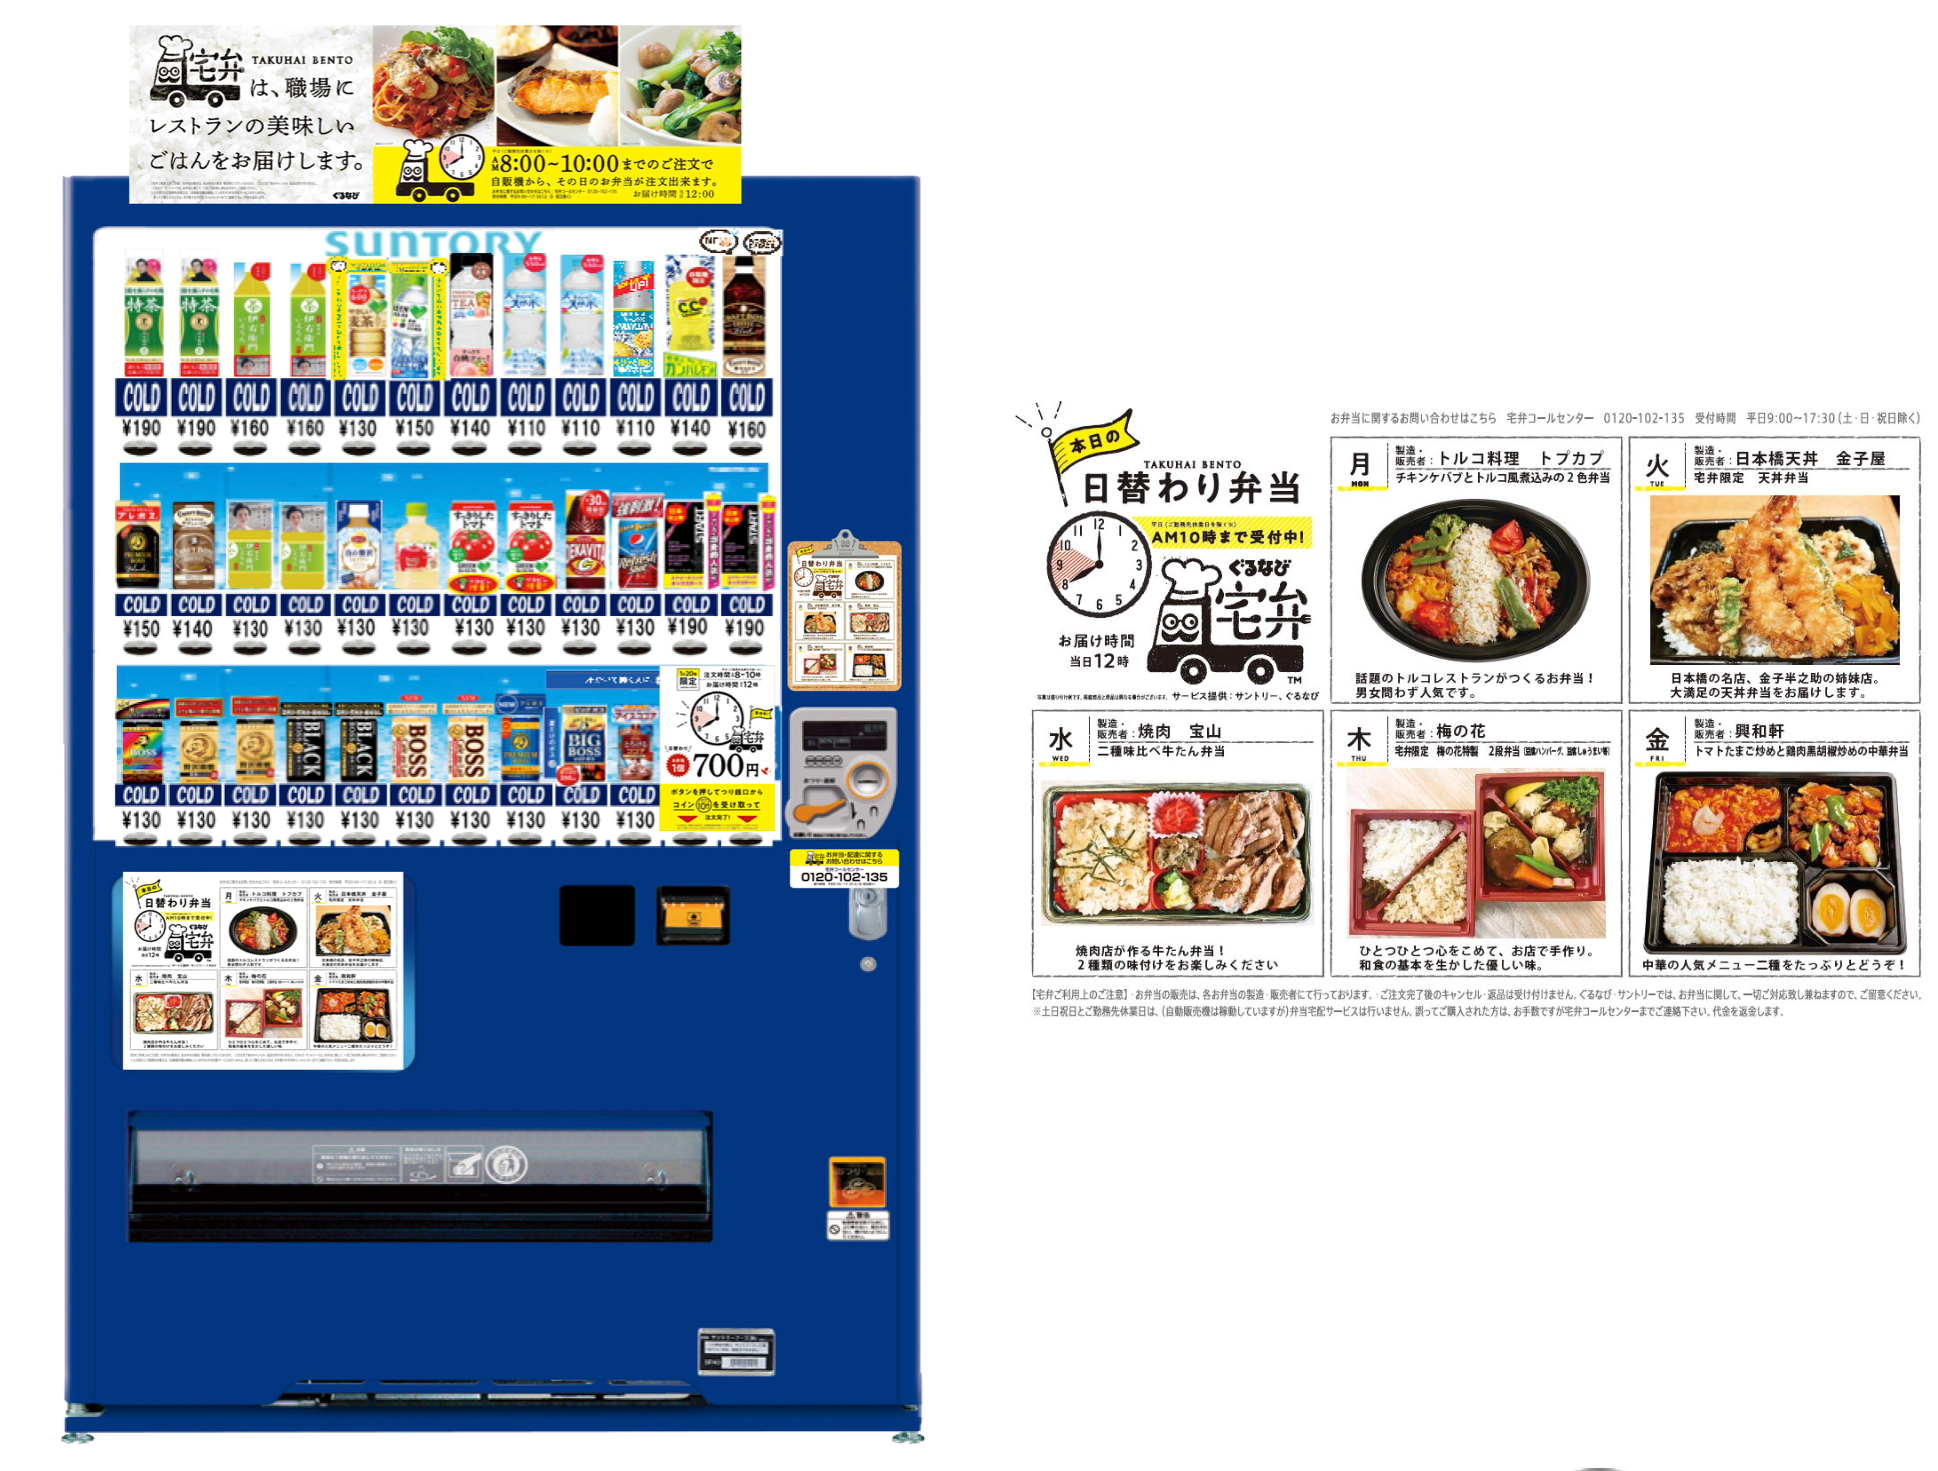 Der Getränkeautomat, mit dem Lunchboxen bestellen kann.